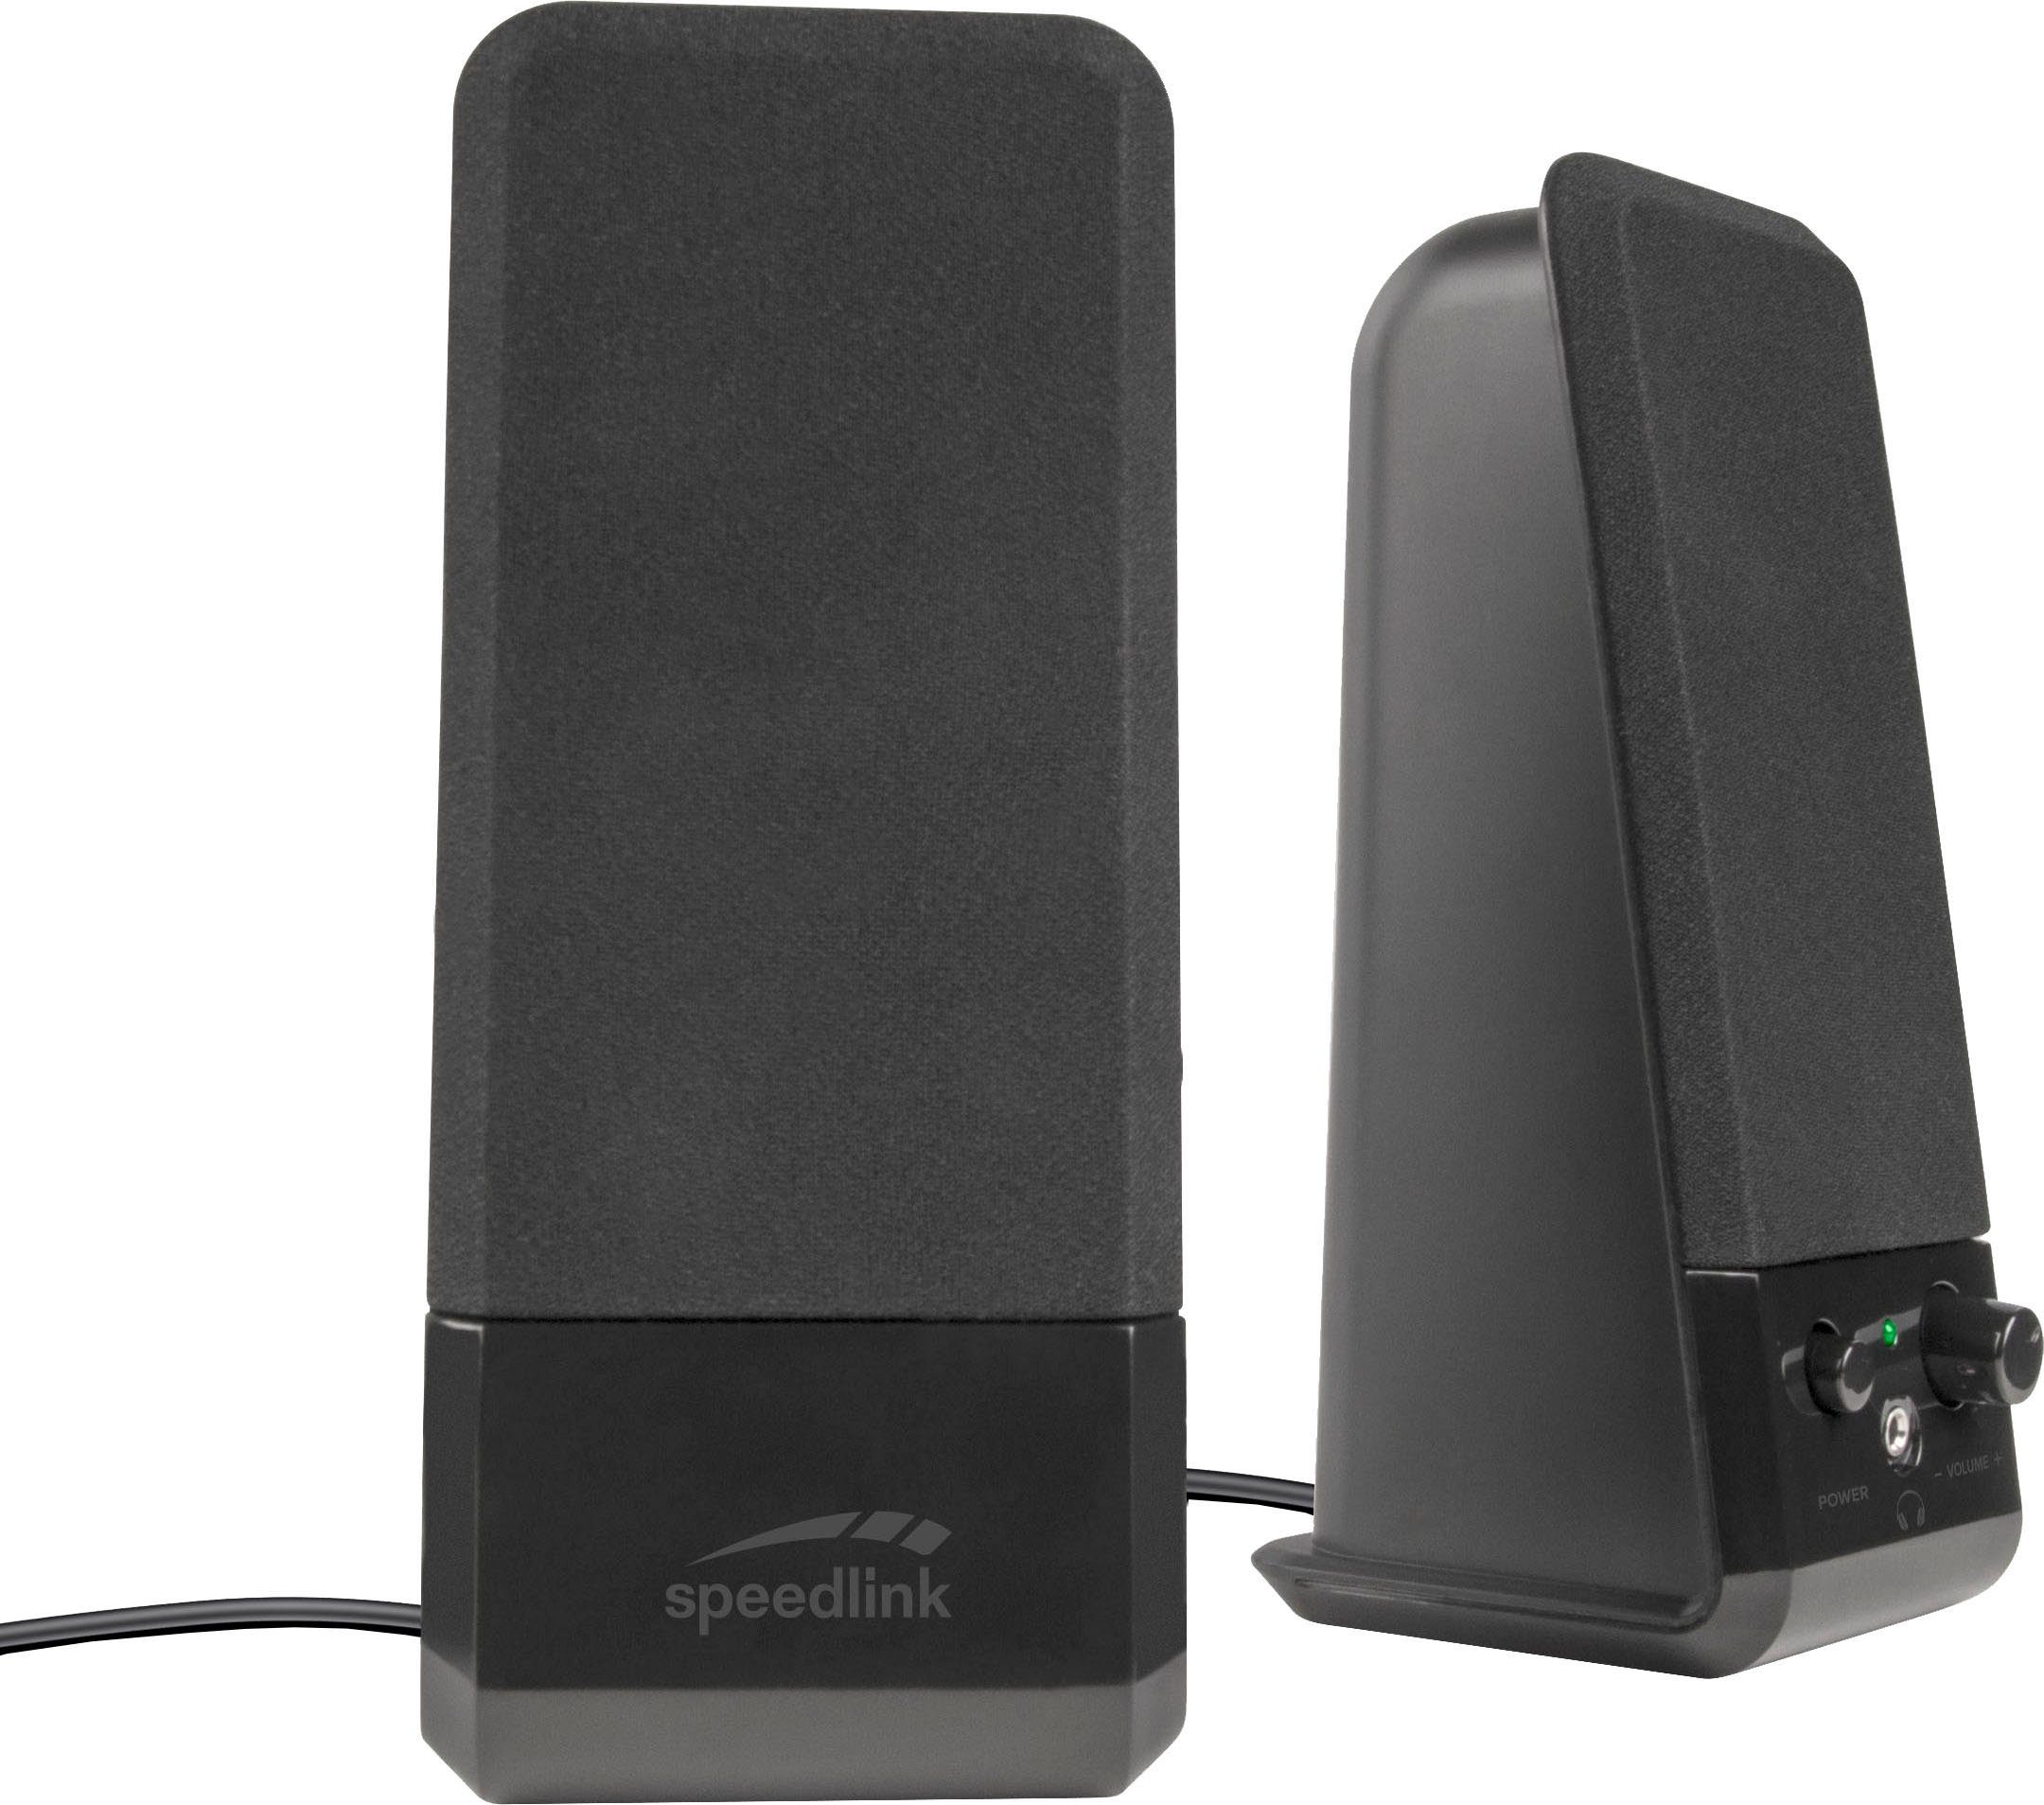 Speedlink EVENT Stereo PC-Lautsprecher W) (5